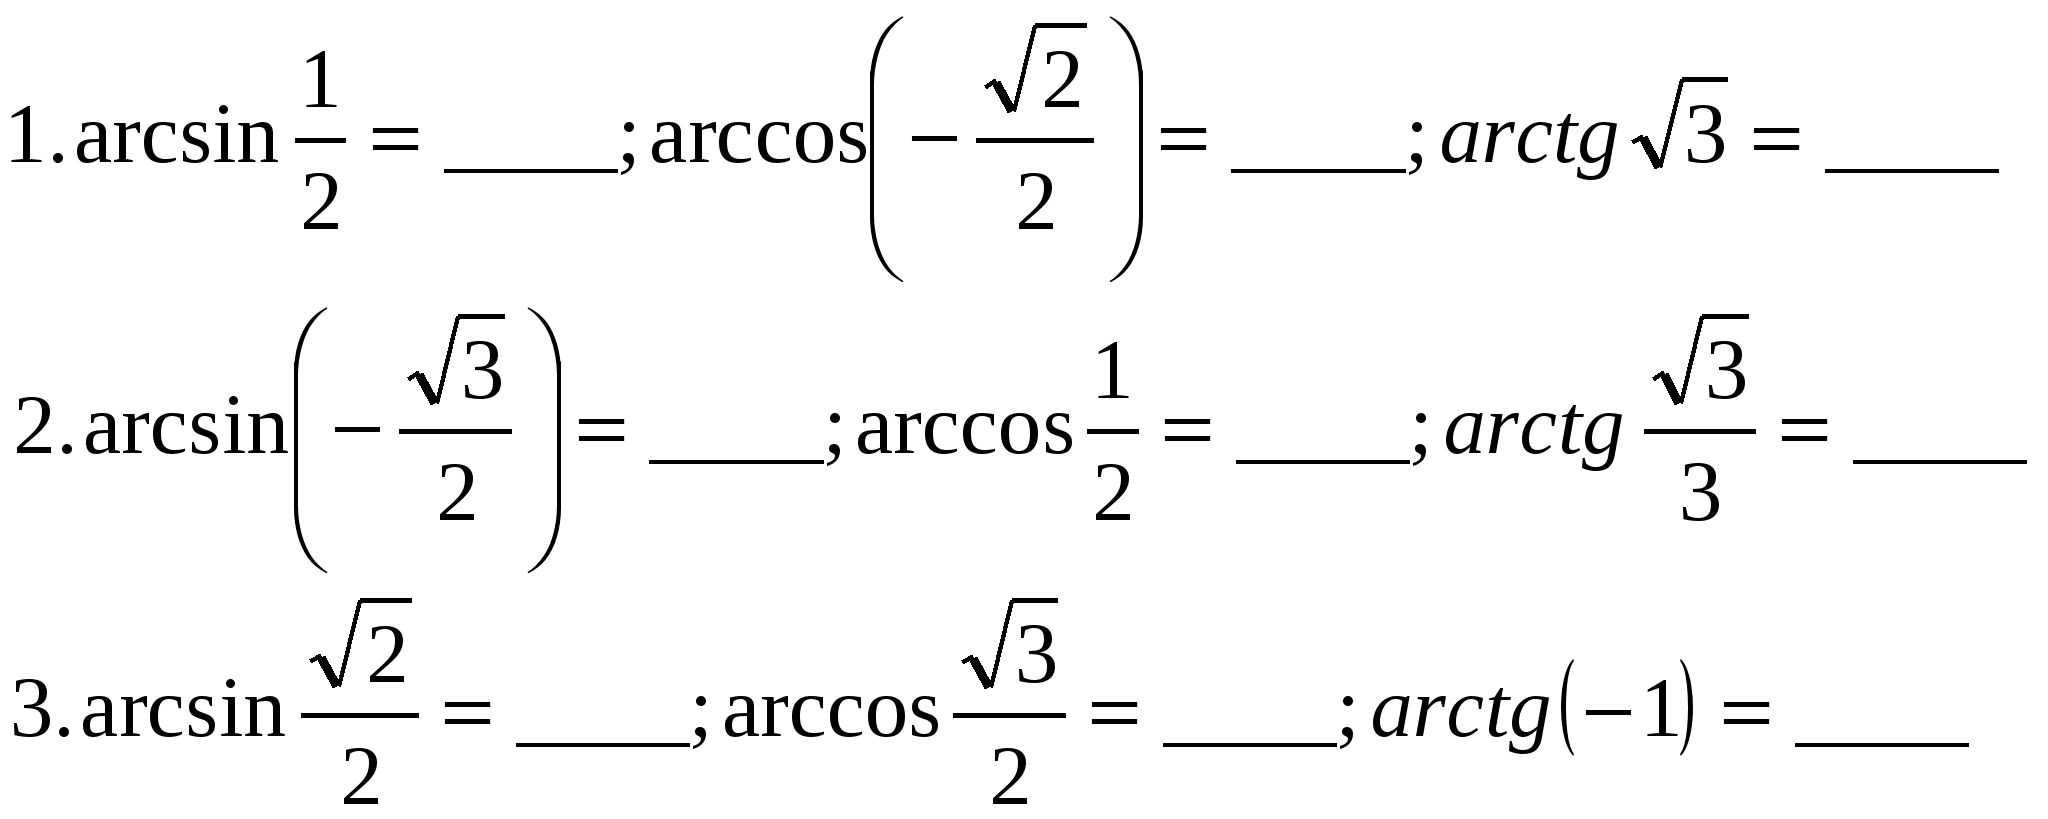 Arctg. Arcsin Arccos. Arcsin и Arccos формулы. Arcsin Arccos arctg arcctg. Интеграл arctg